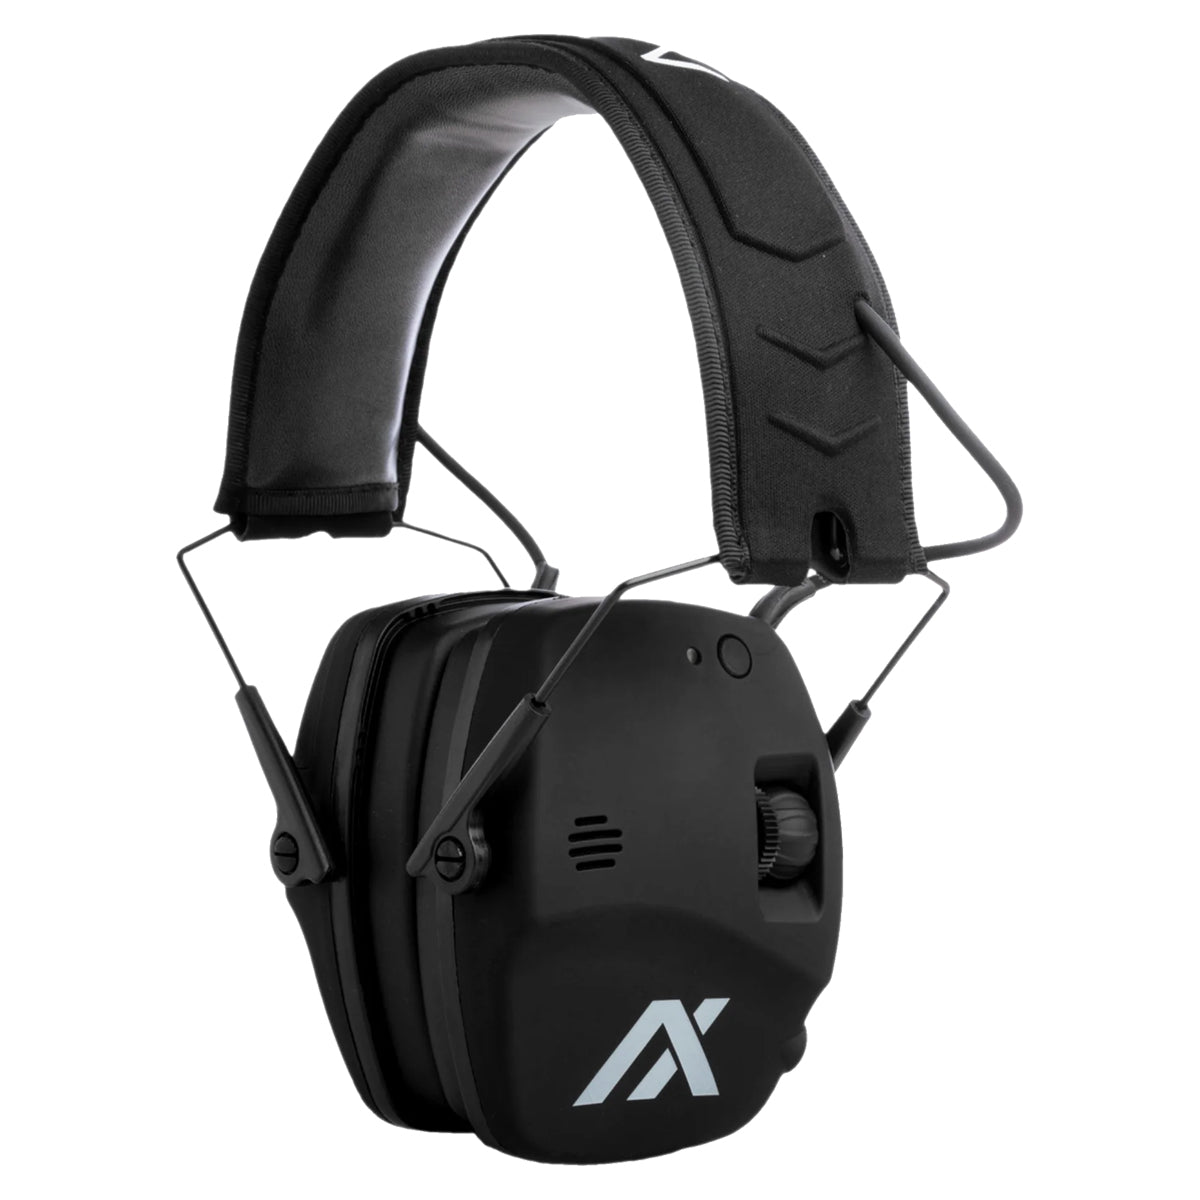 Axil Trackr Blu Ear Muffs in  by GOHUNT | Axil - GOHUNT Shop